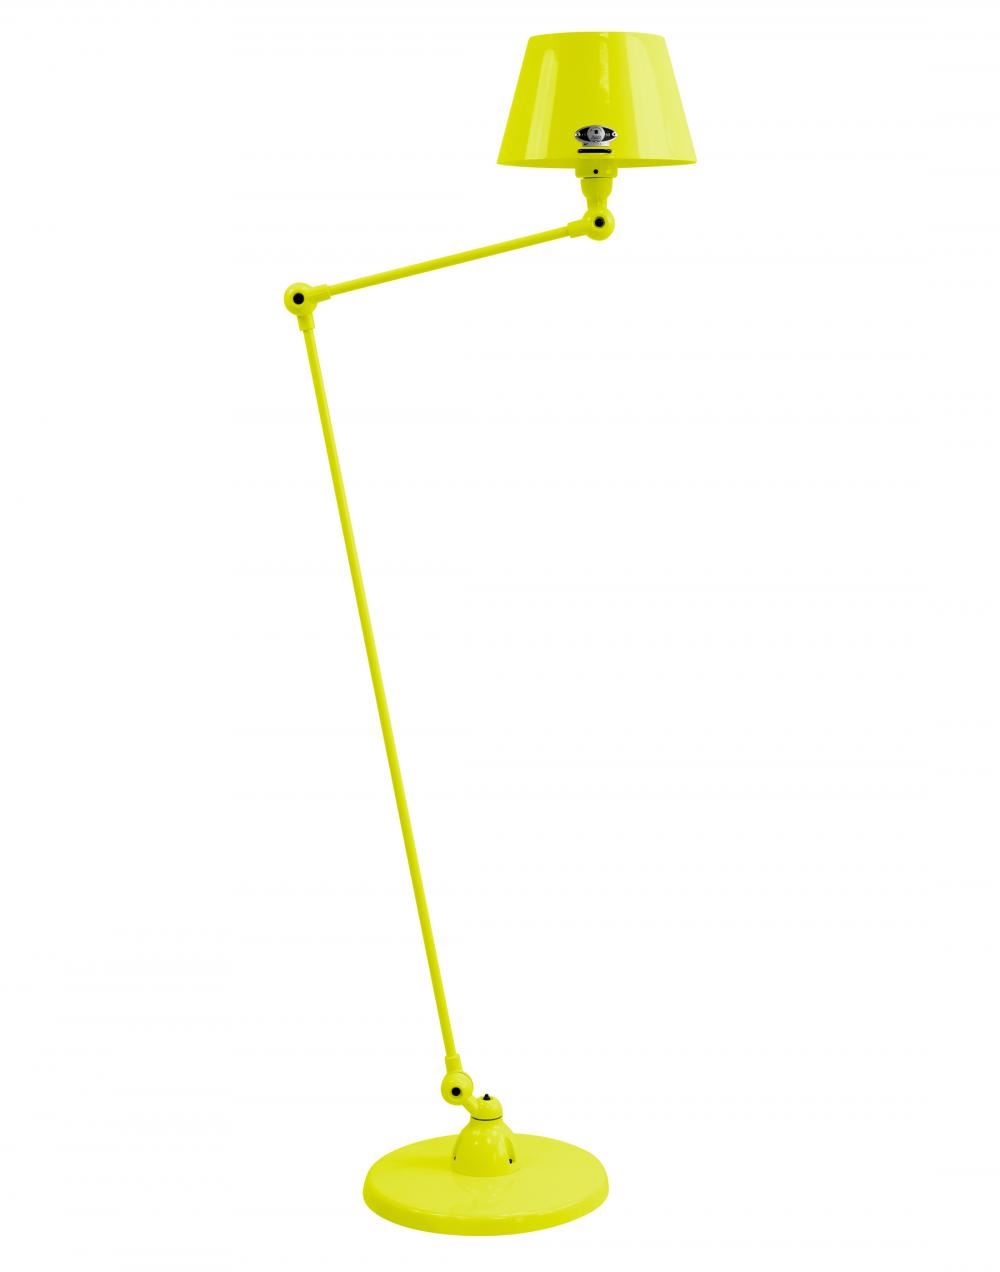 Jielde Aicler Two Arm Floor Light Straight Shade Yellow Sulphur Matt